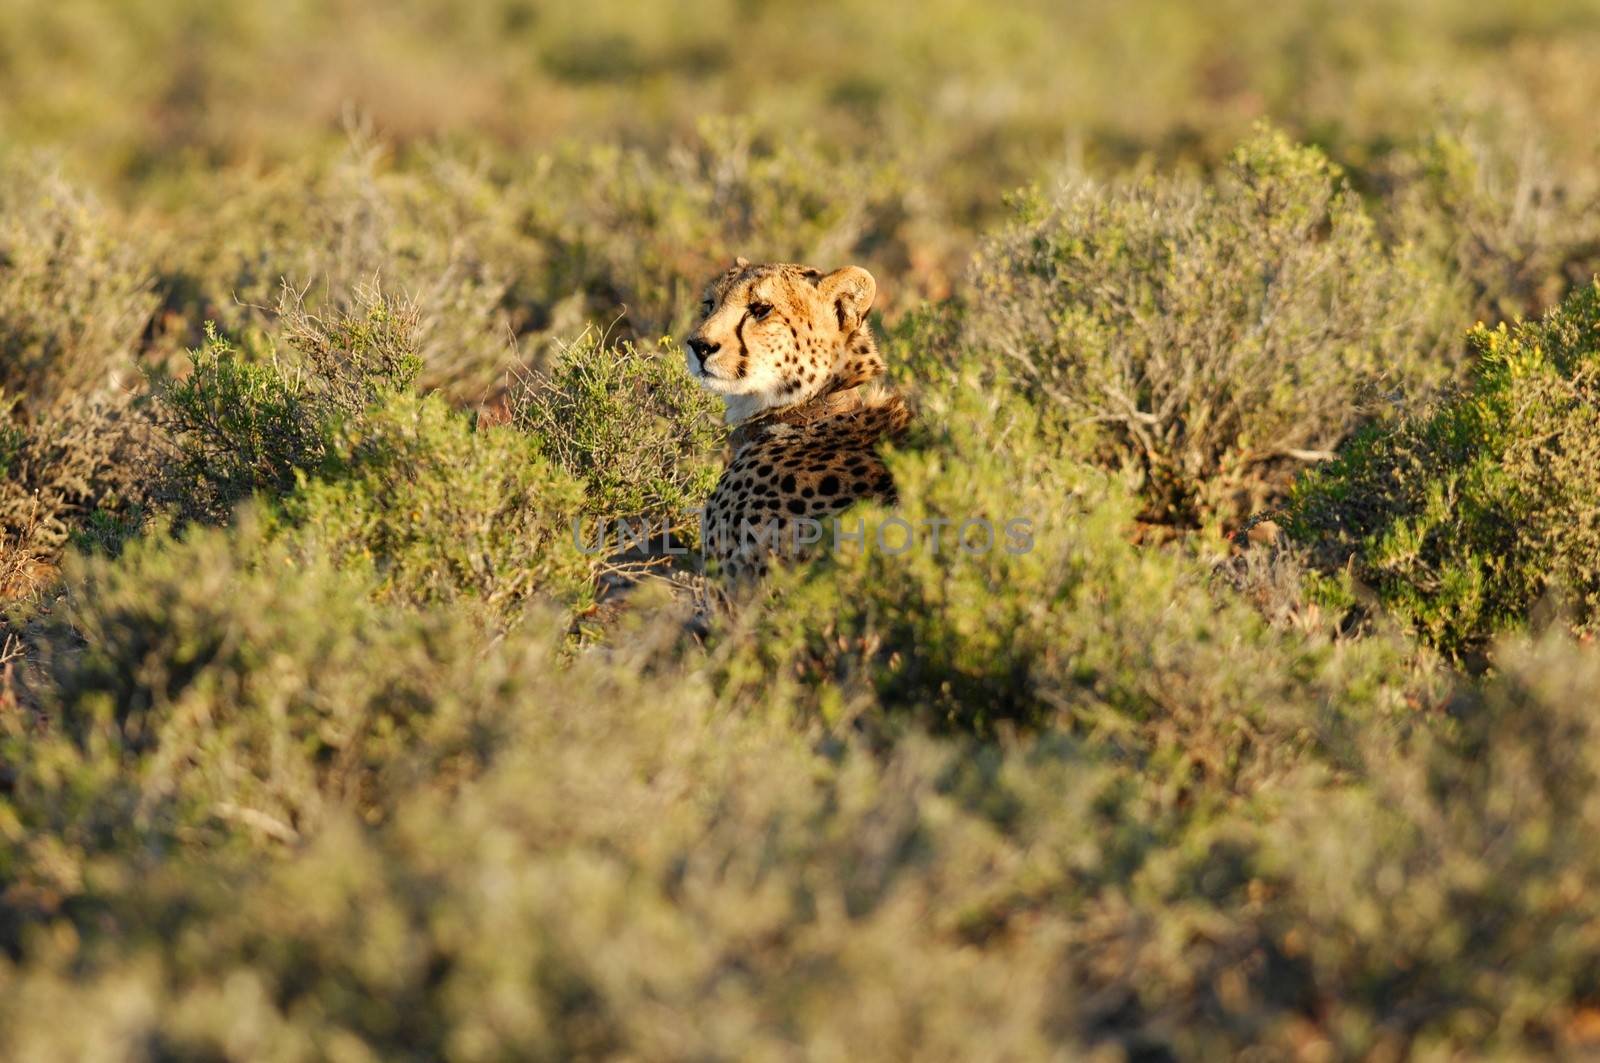 A shot of a wild cheetah in captivity